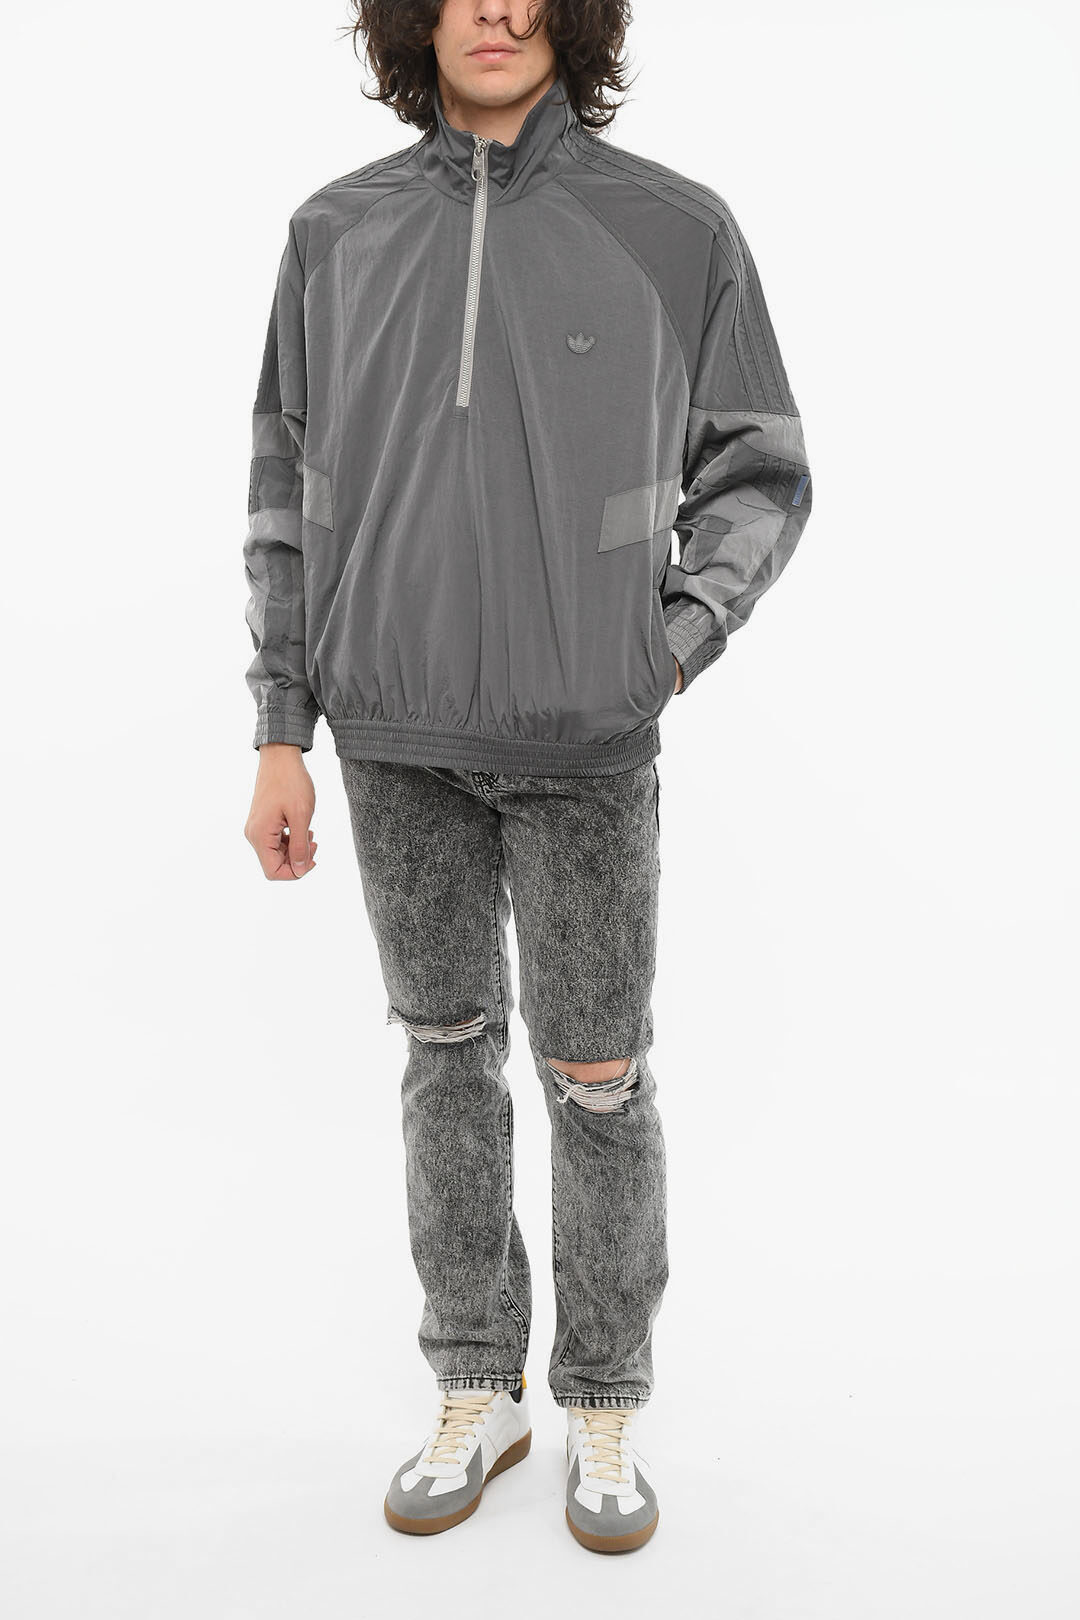 Adidas BLONDEY MCCOY Reflective Effect Windbreaker Jacket with Collar men -  Glamood Outlet